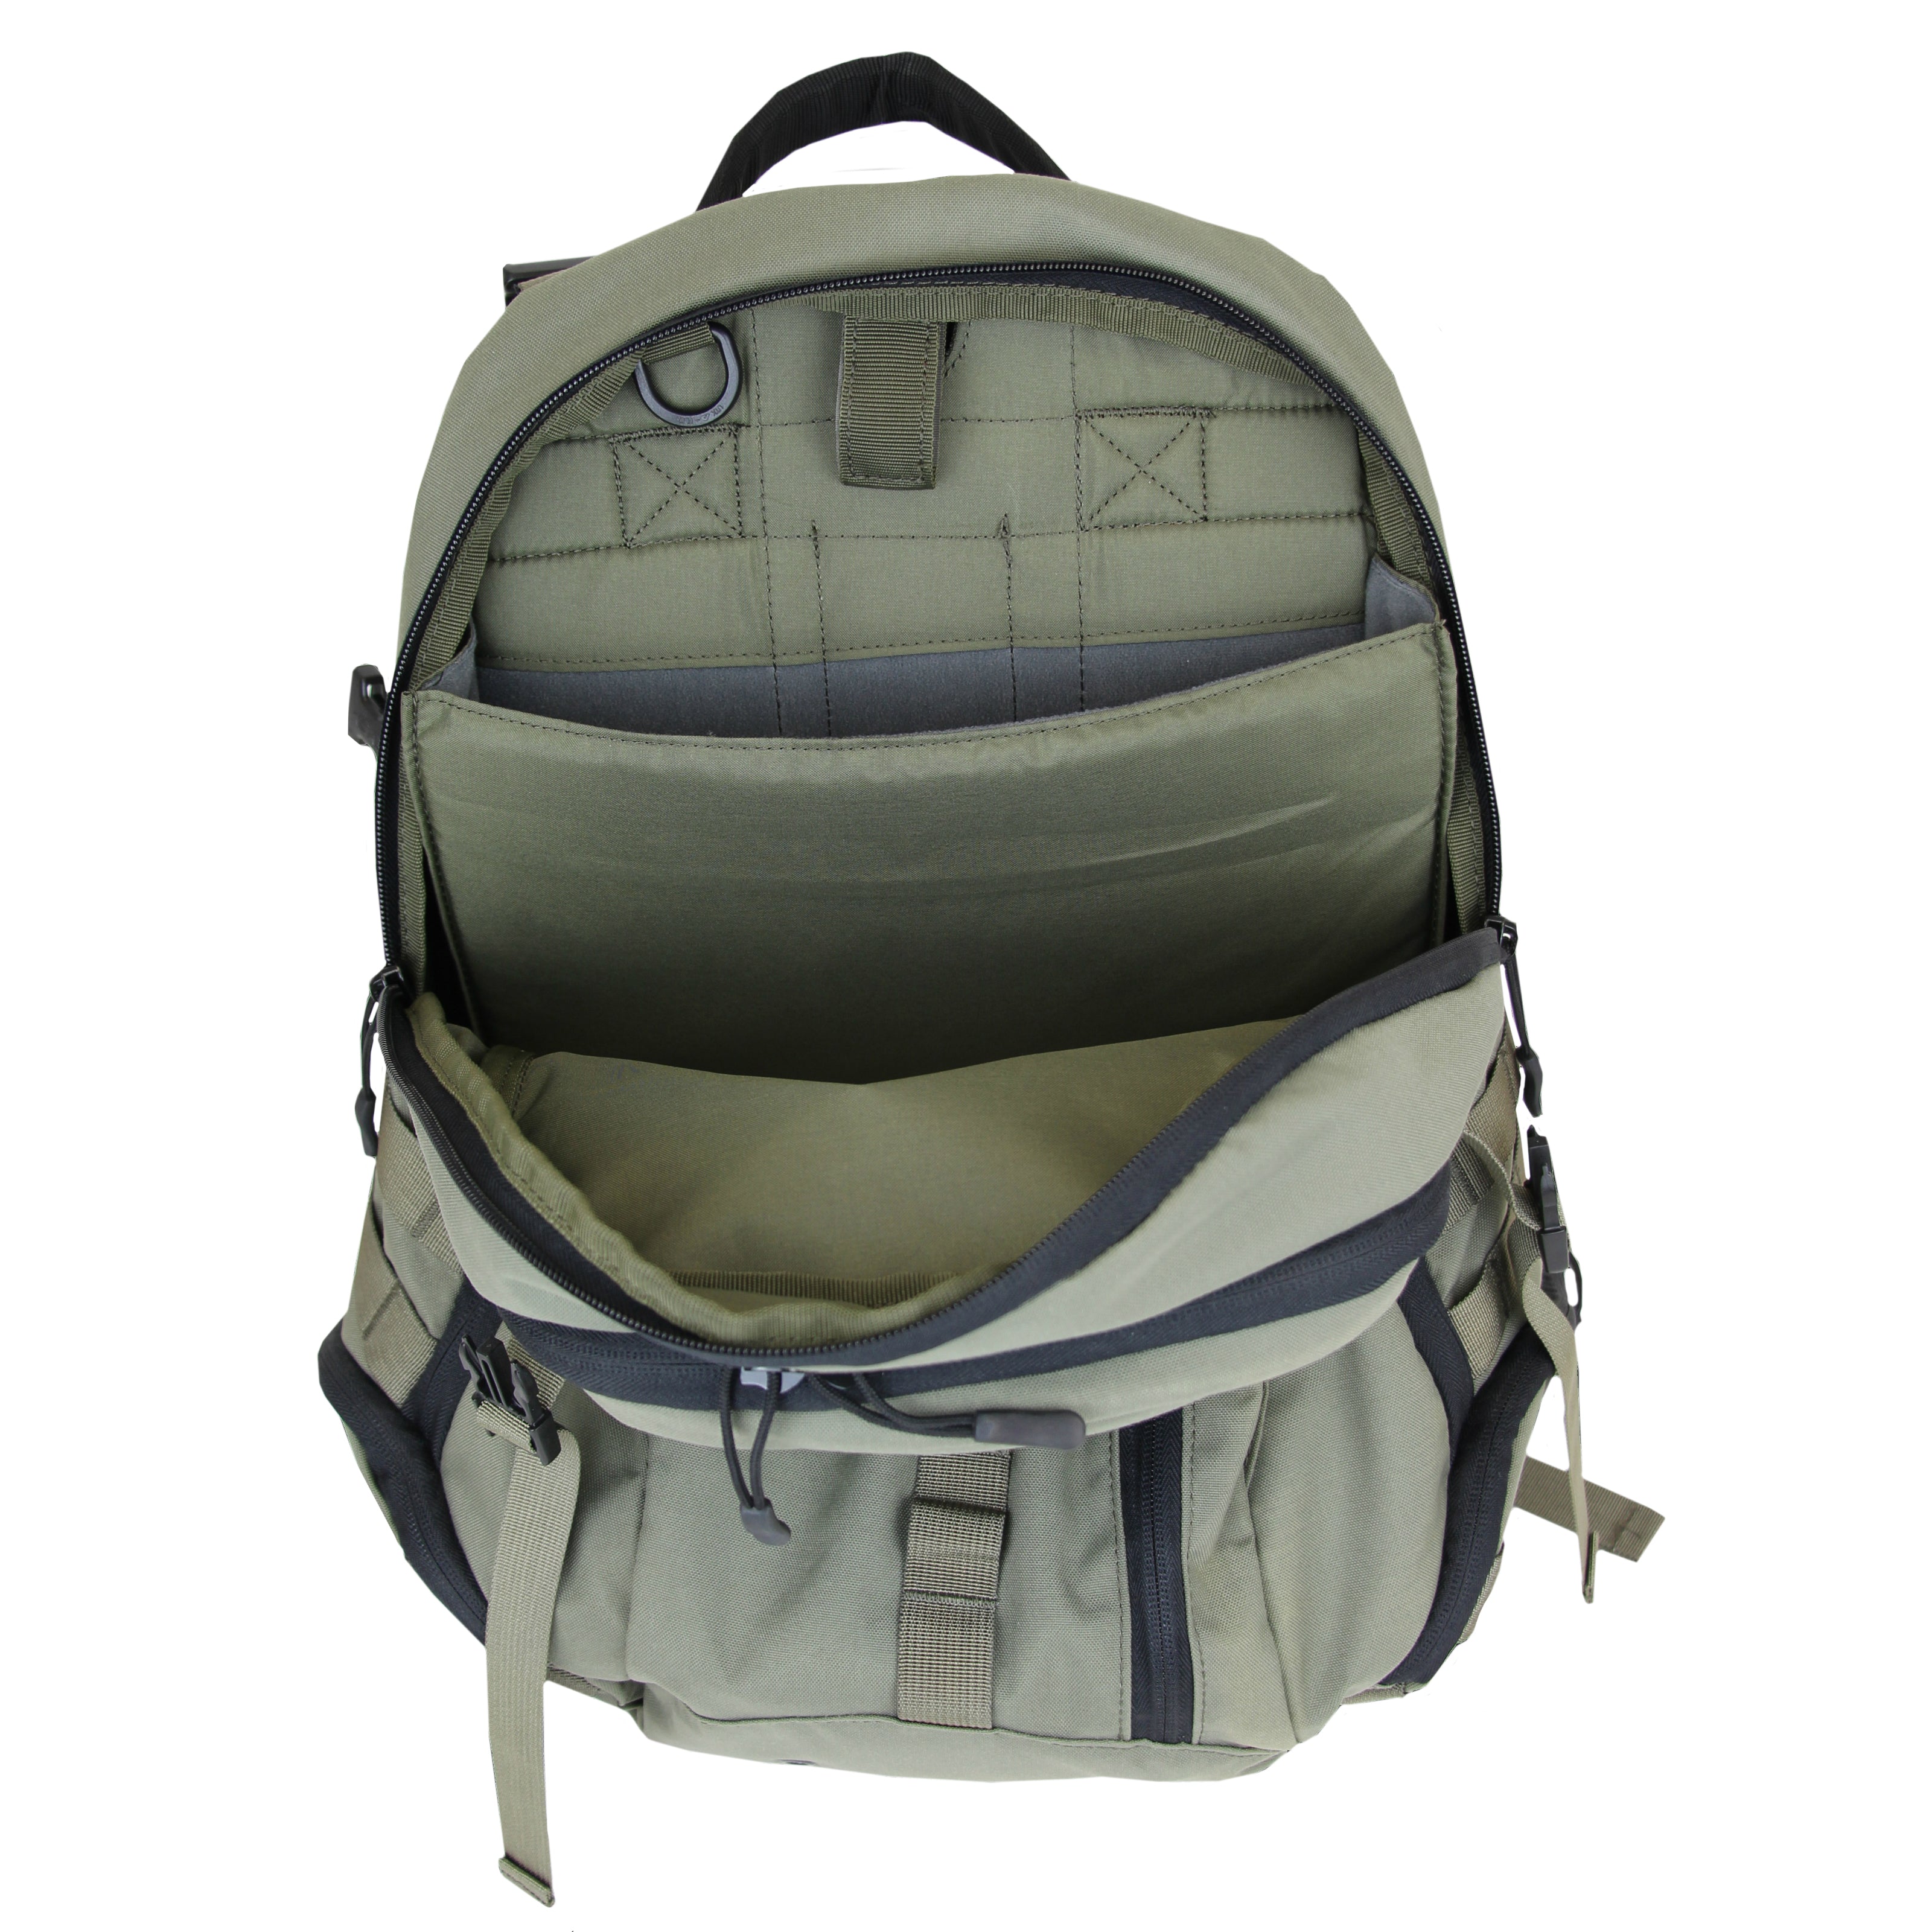 Marom Dolphin IDF backpack tactiacl EDC Og 27L - תיק יום מרעום דולפין, אוג 27 